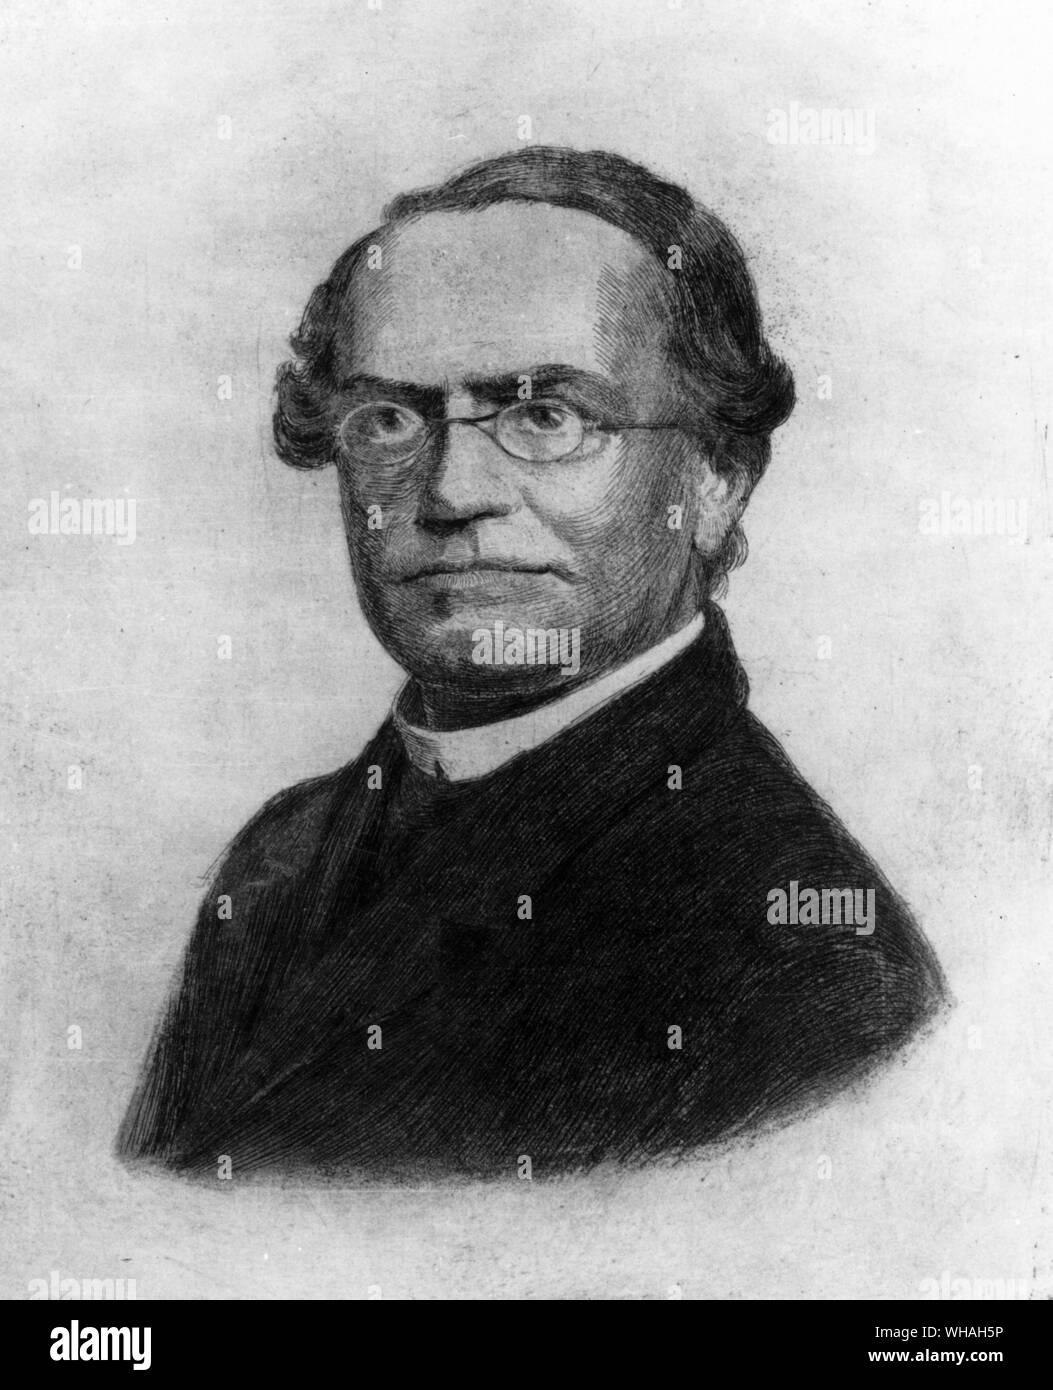 Gregor Johann Mendel gained fame as founder of the modern Science of Genetics